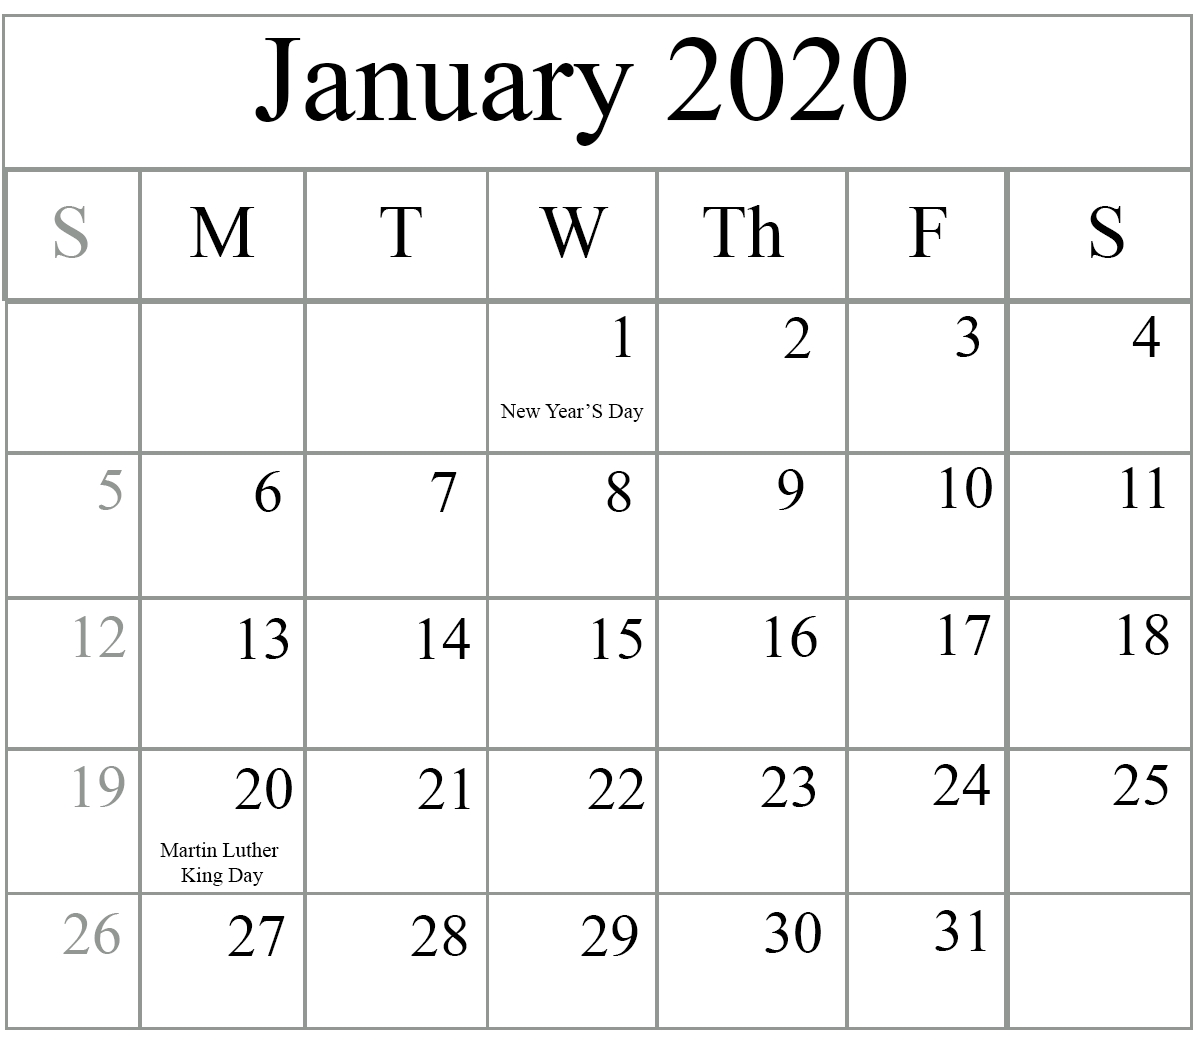 January 2020 Calendar Pdf | Printable Calendar Template